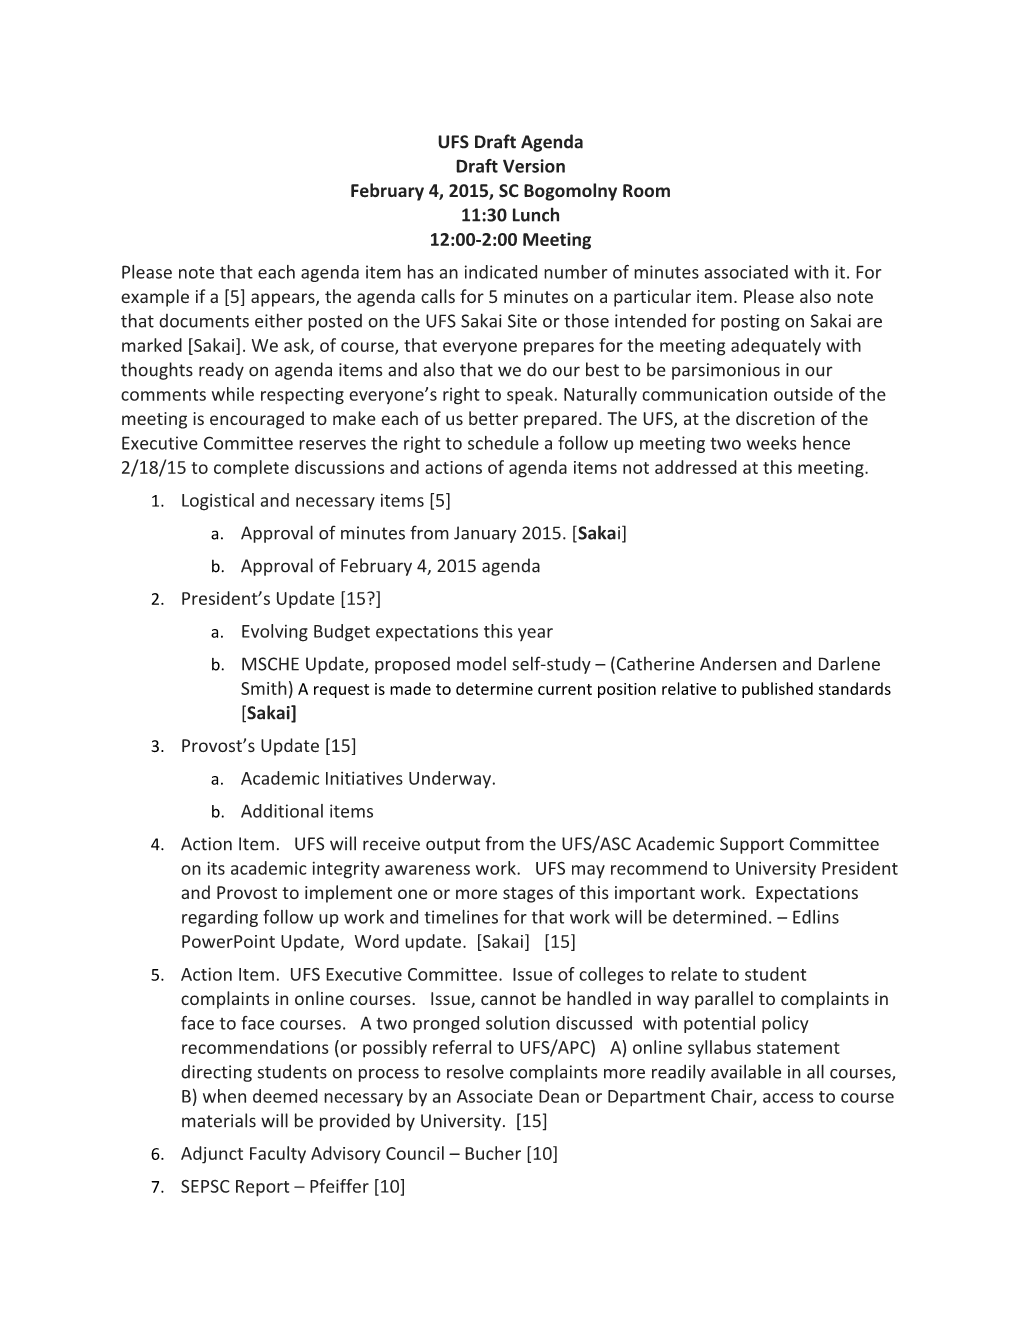 UFS Draft Agenda Draft Version February 4, 2015, SC Bogomolny Room 11:30 Lunch 12:00-2:00